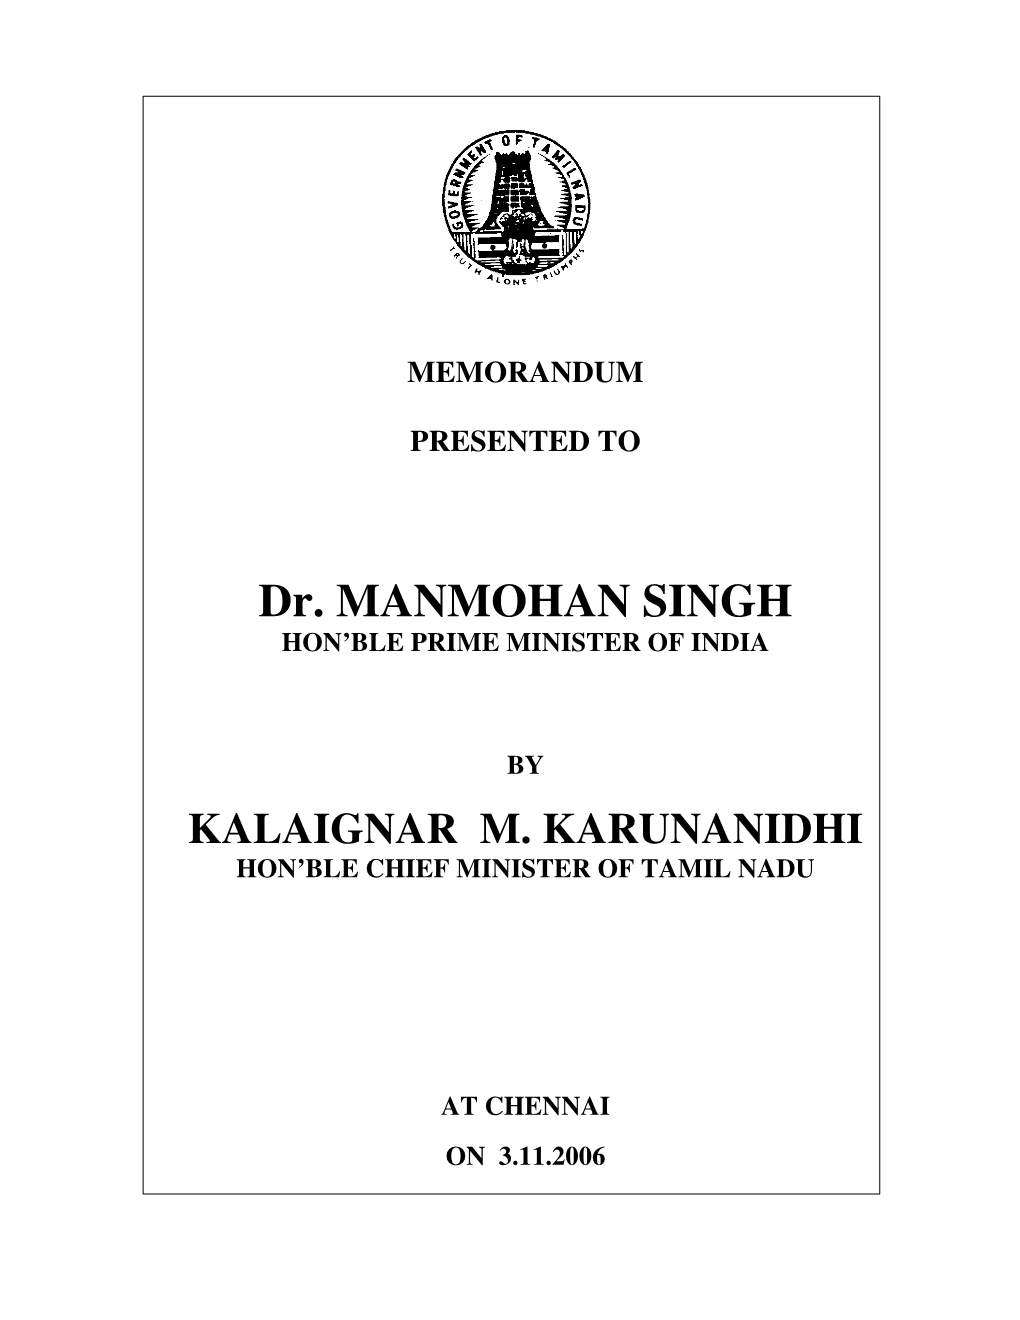 Dr. MANMOHAN SINGH HON’BLE PRIME MINISTER of INDIA